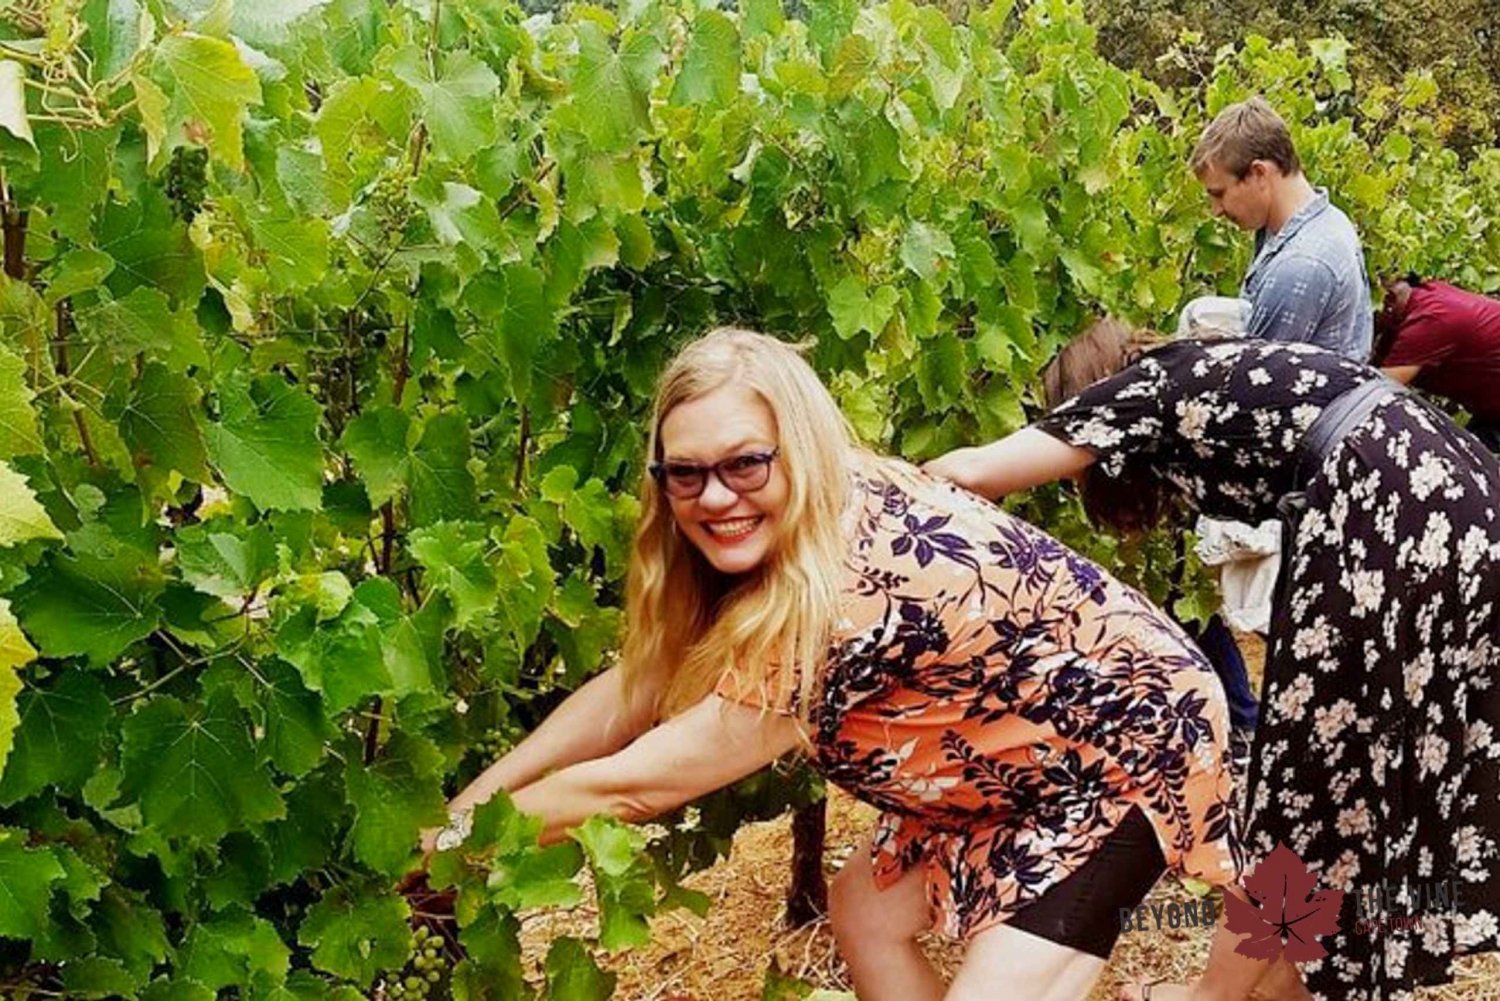 Stellenbosch: Exclusieve wijntour - Blend & bottel je eigen wijn